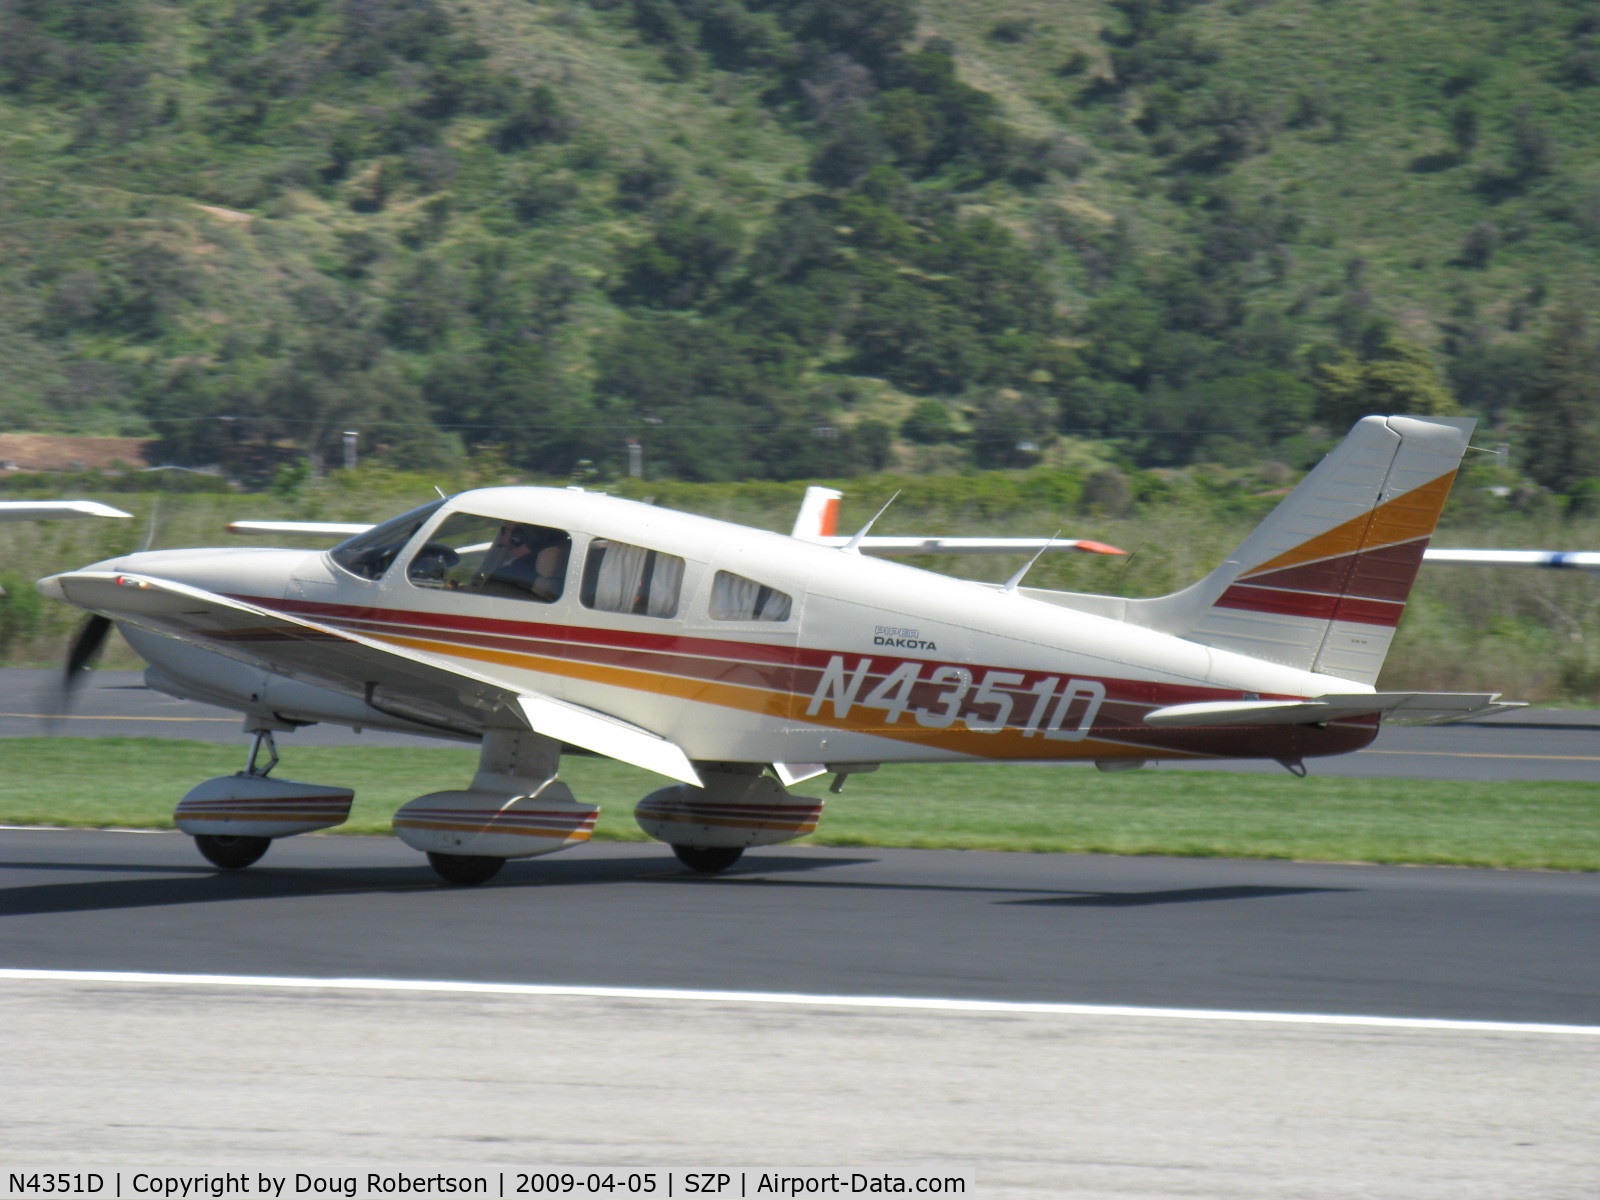 N4351D, 1984 Piper PA-28-236 Dakota C/N 28-8411016, 1984 Piper PA-28-236 DAKOTA, Lycoming O-540-J3A5D 235 hp, takeoff roll Rwy 04